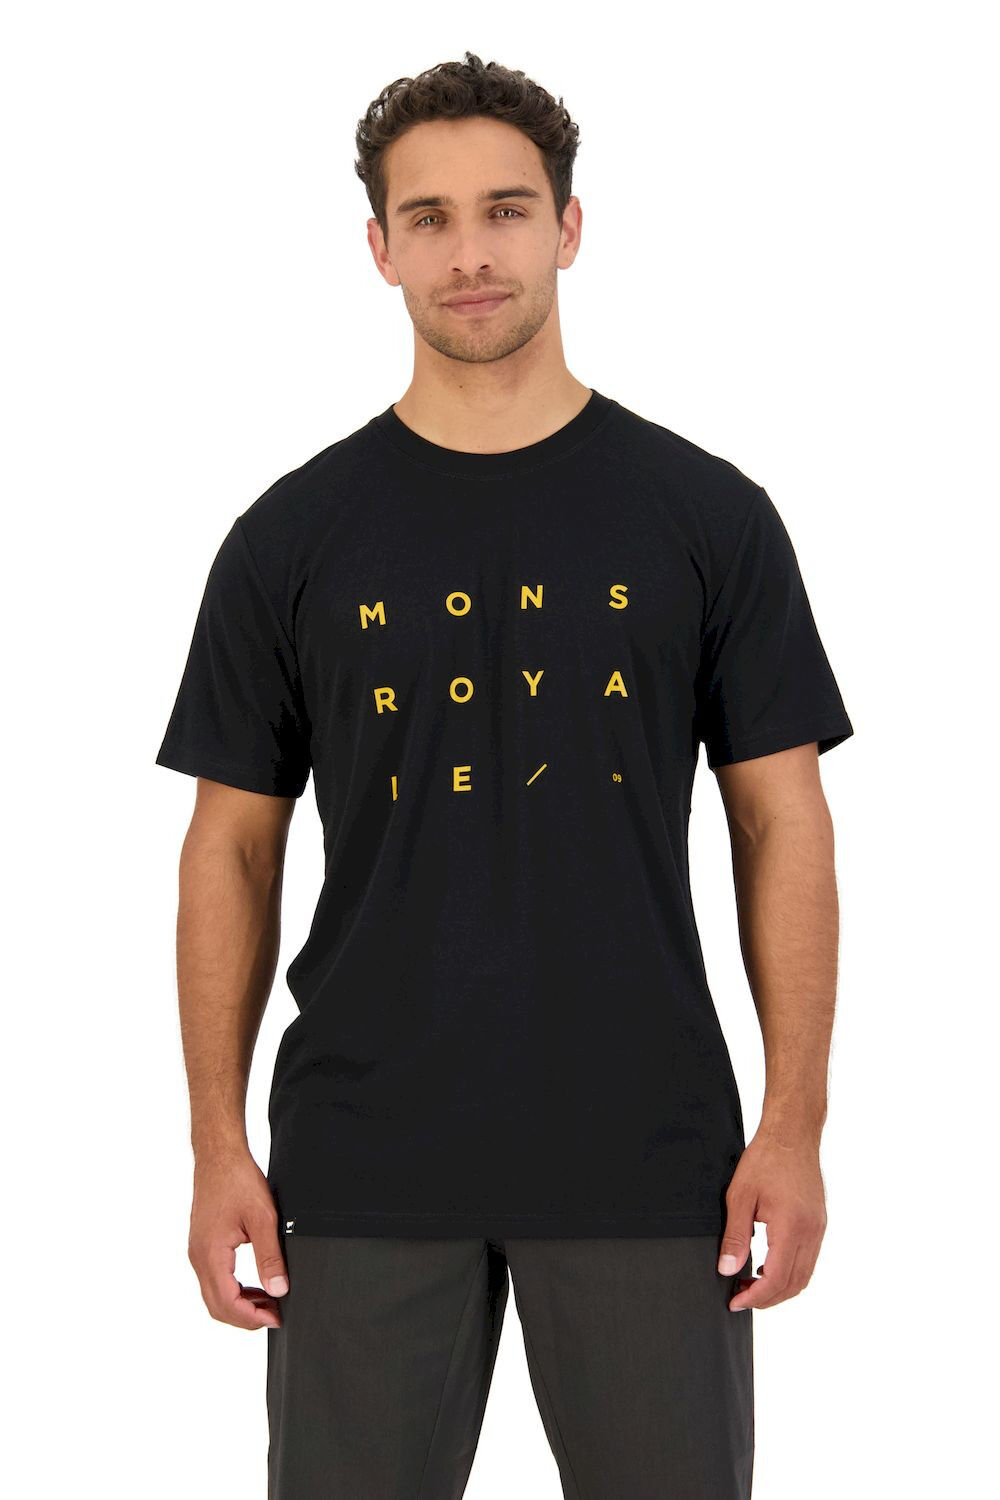 Mons Royale Icon T-Shirt - MTB jersey - Men's